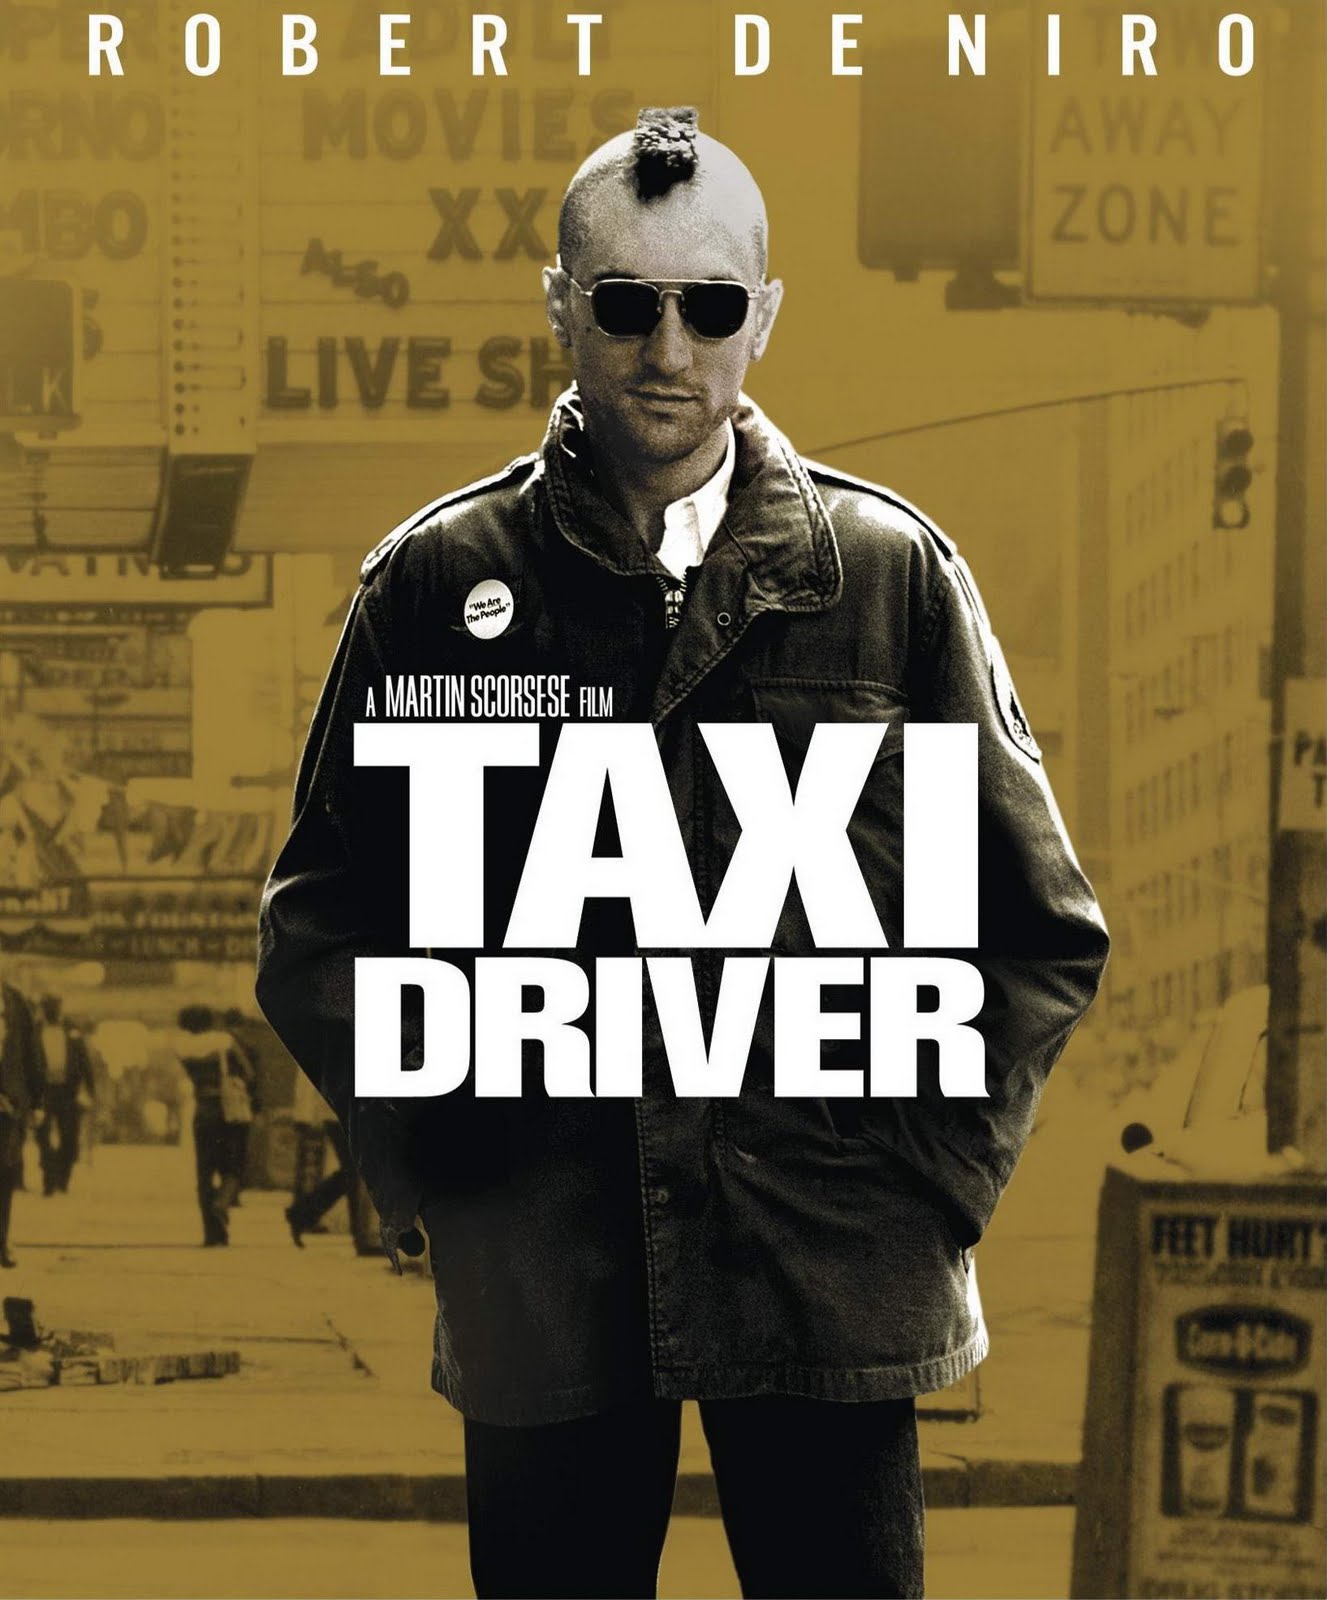 taxidriver-1976-film-poster.jpg